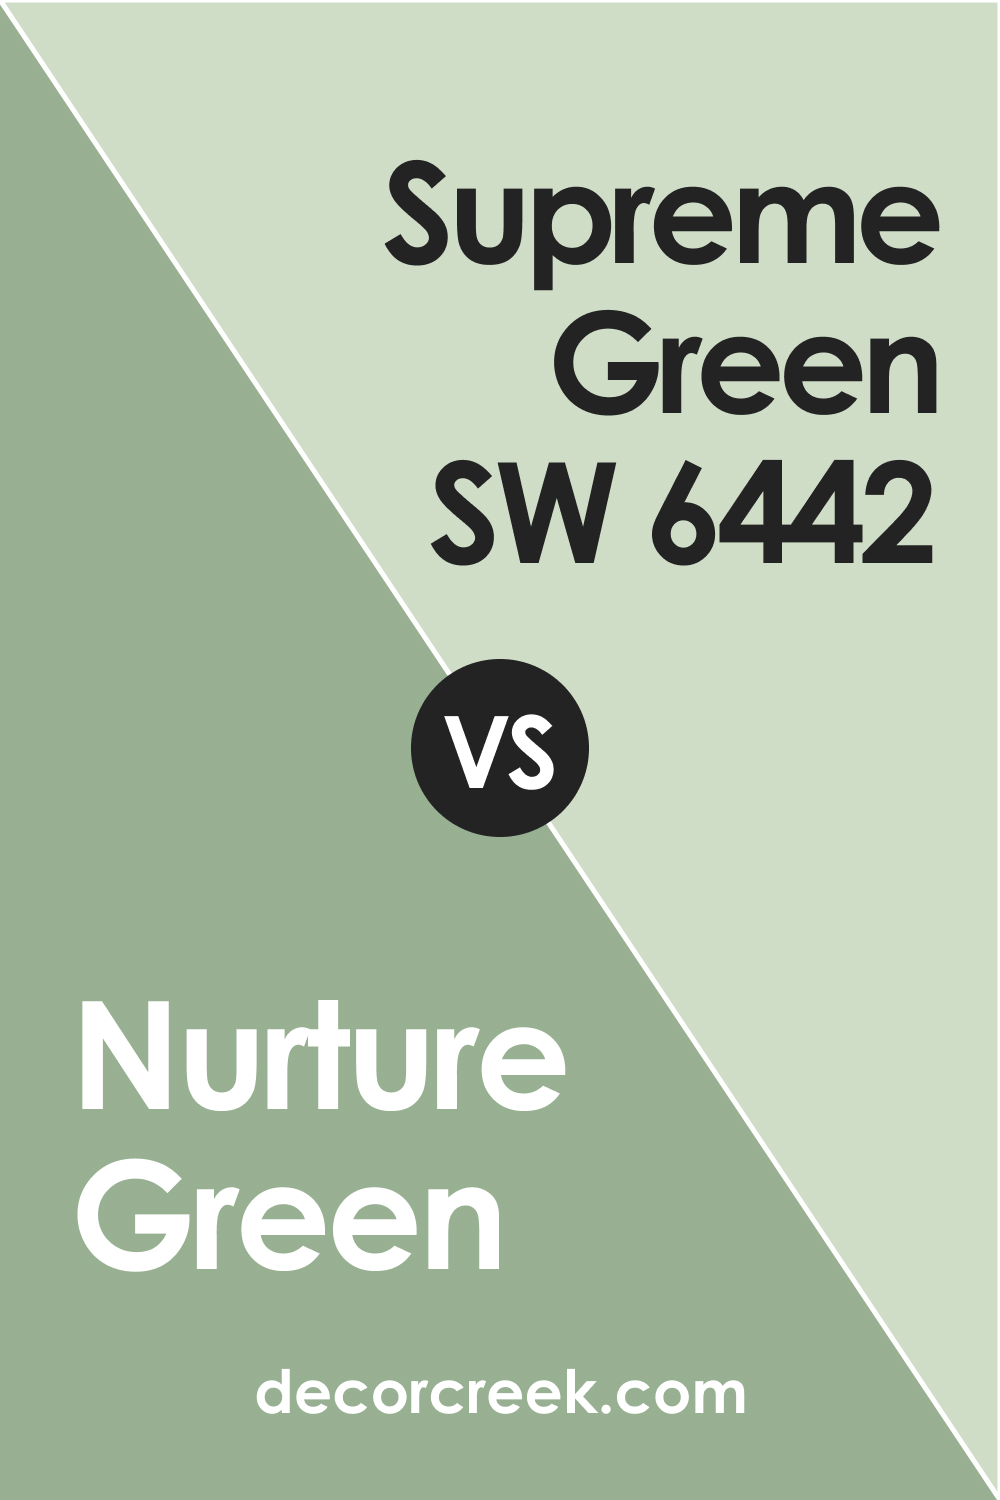 Nurture Green vs Supreme Green